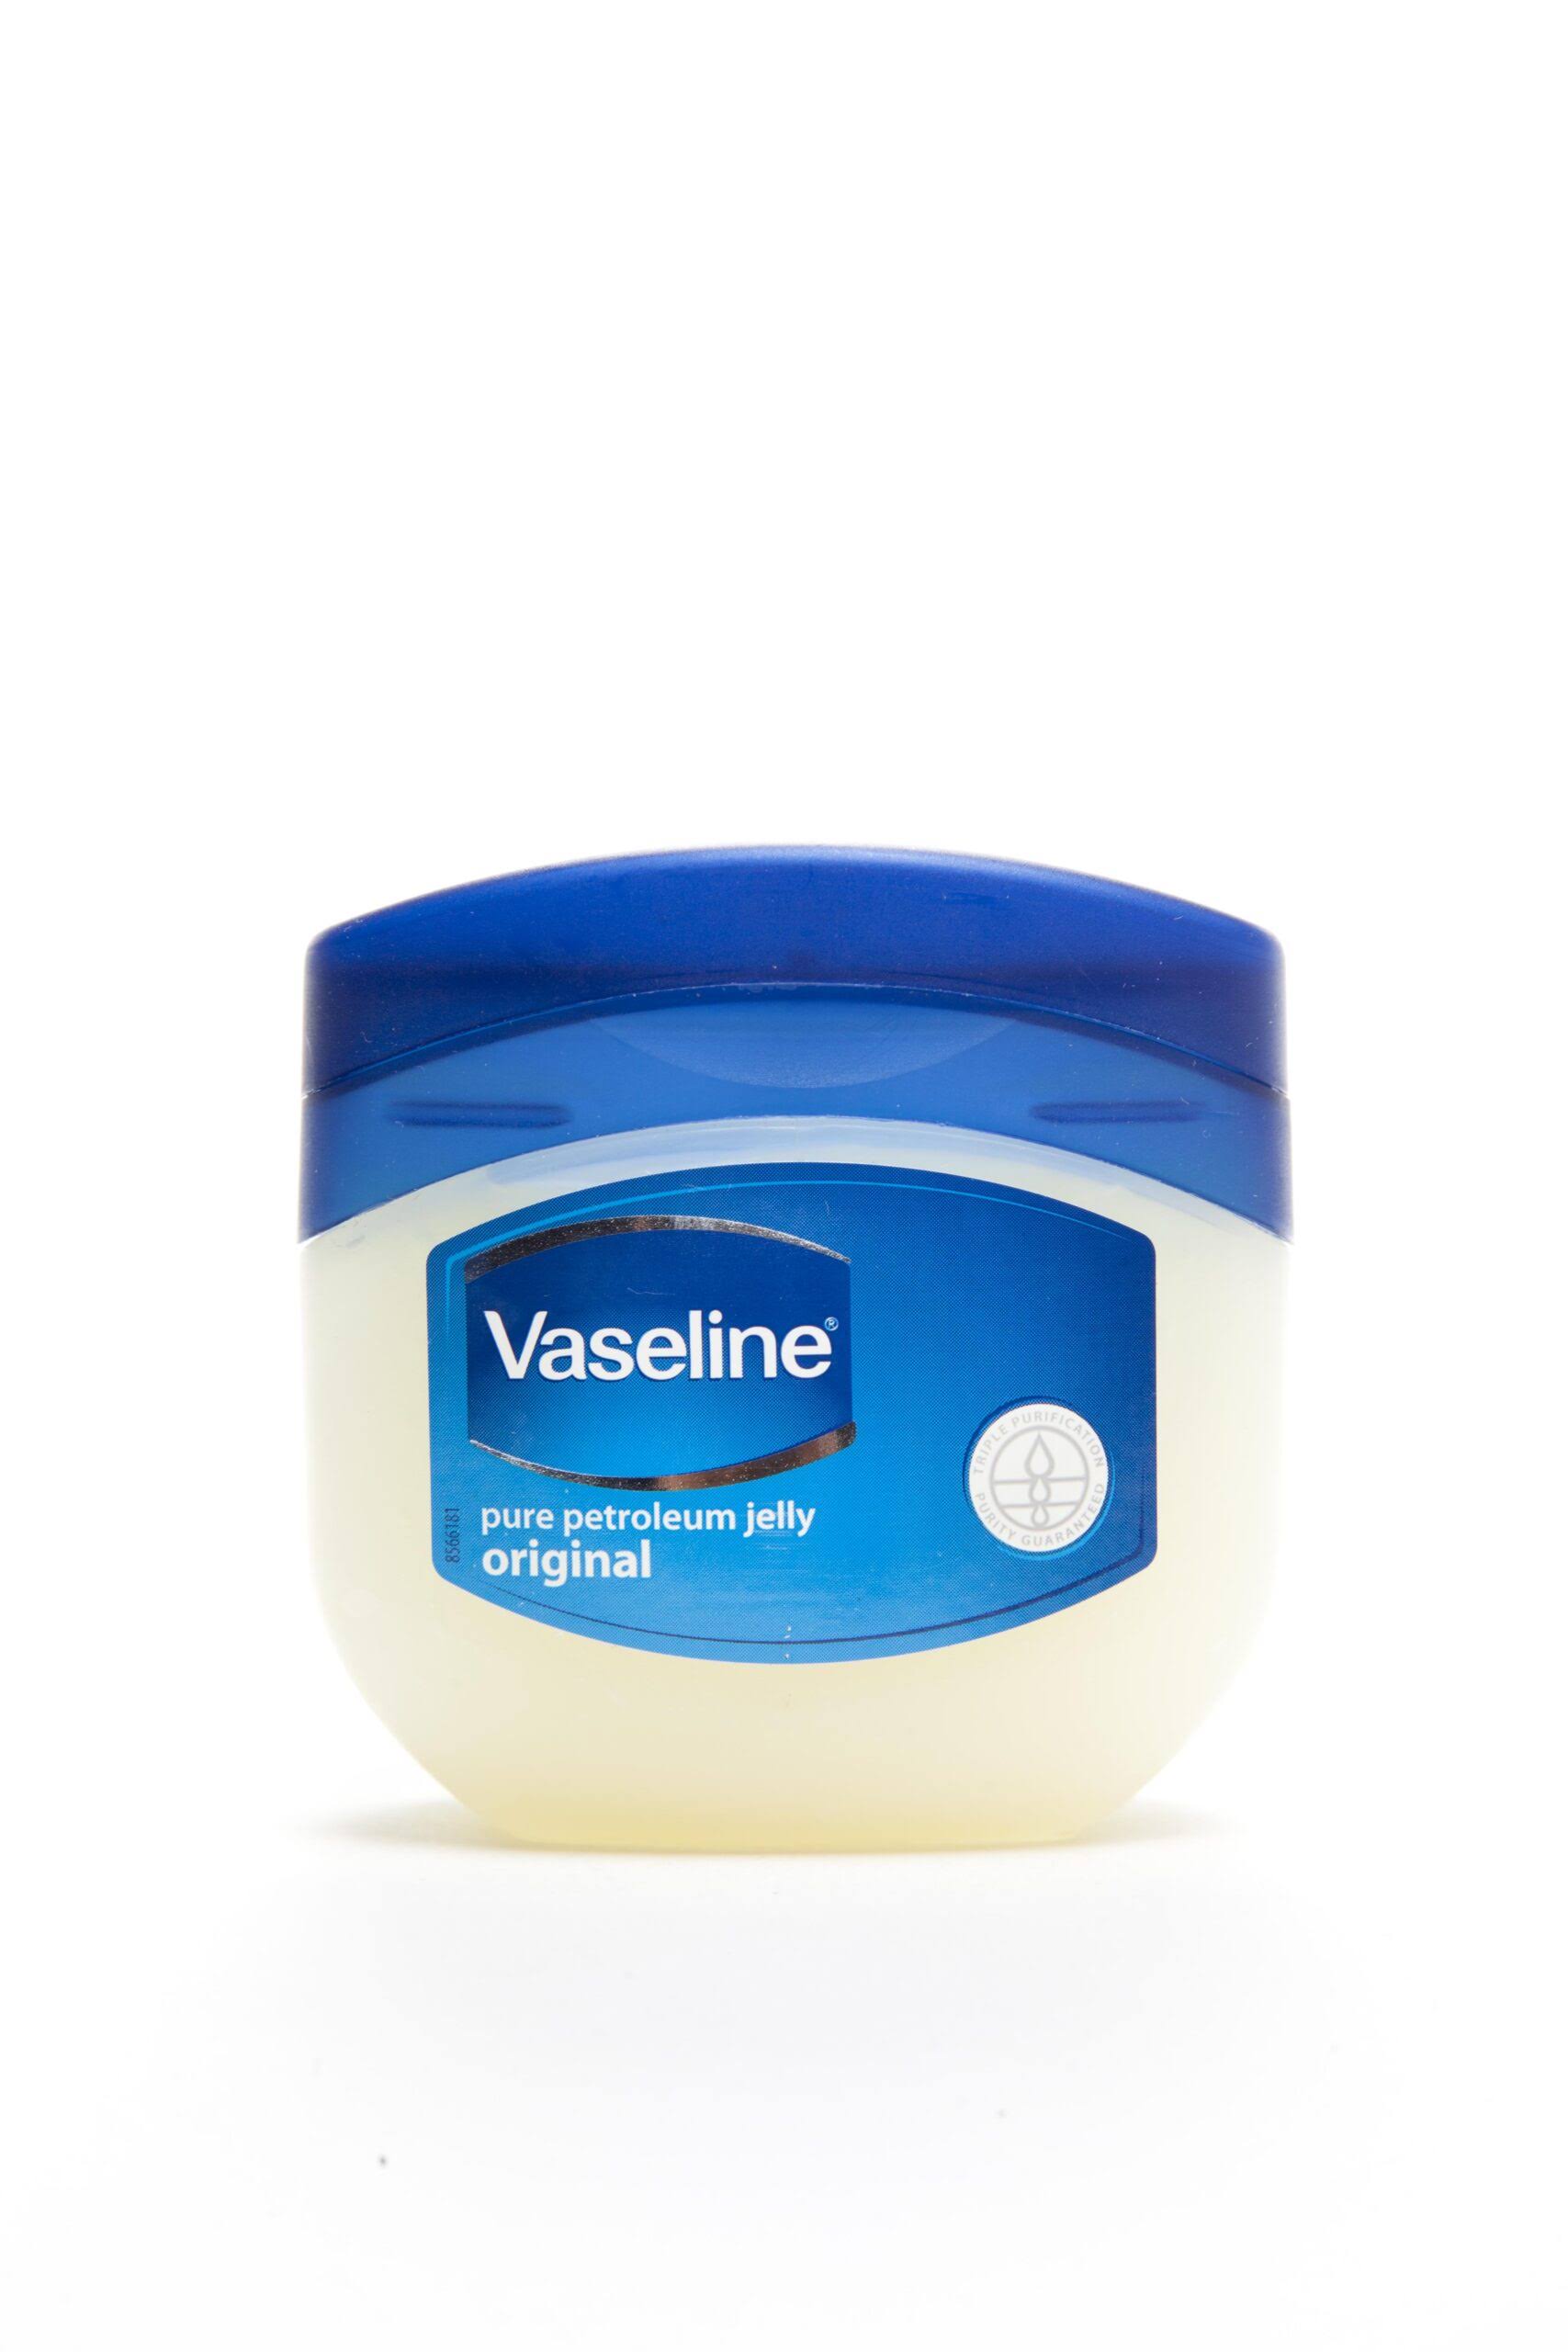 Vaseline Pure Petroleum Jelly - Original, 100ml